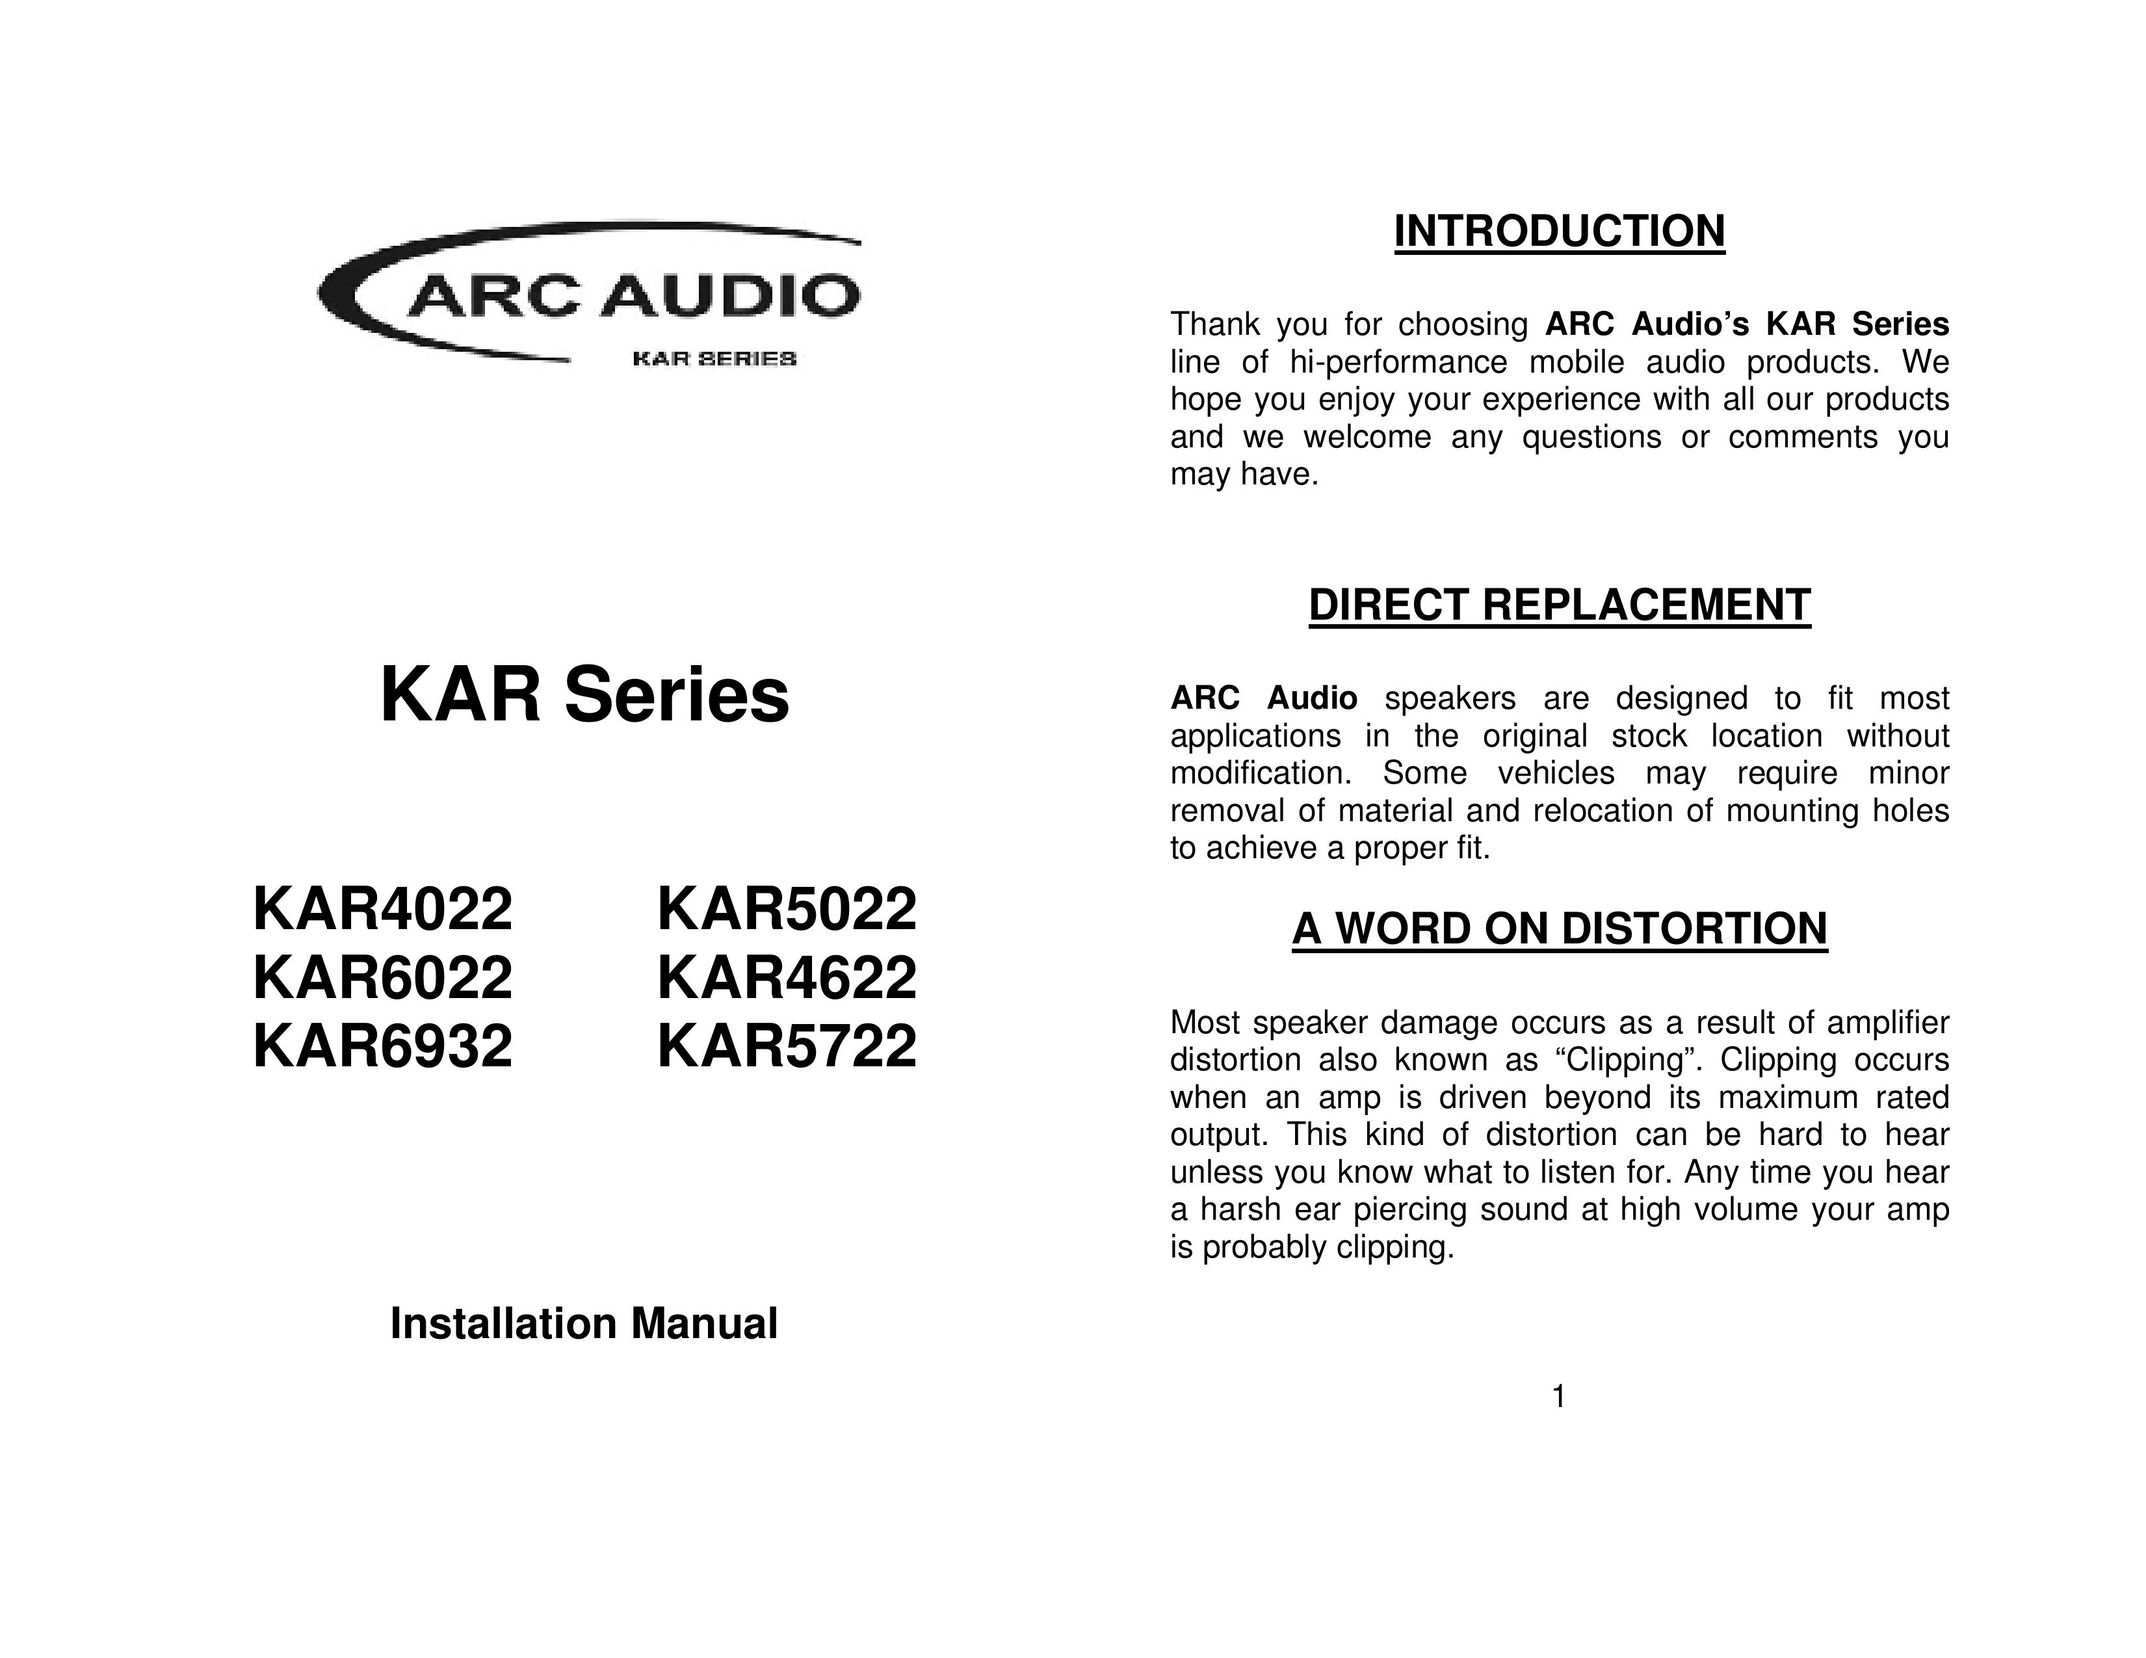 ARC Audio KAR4622 Car Stereo System User Manual